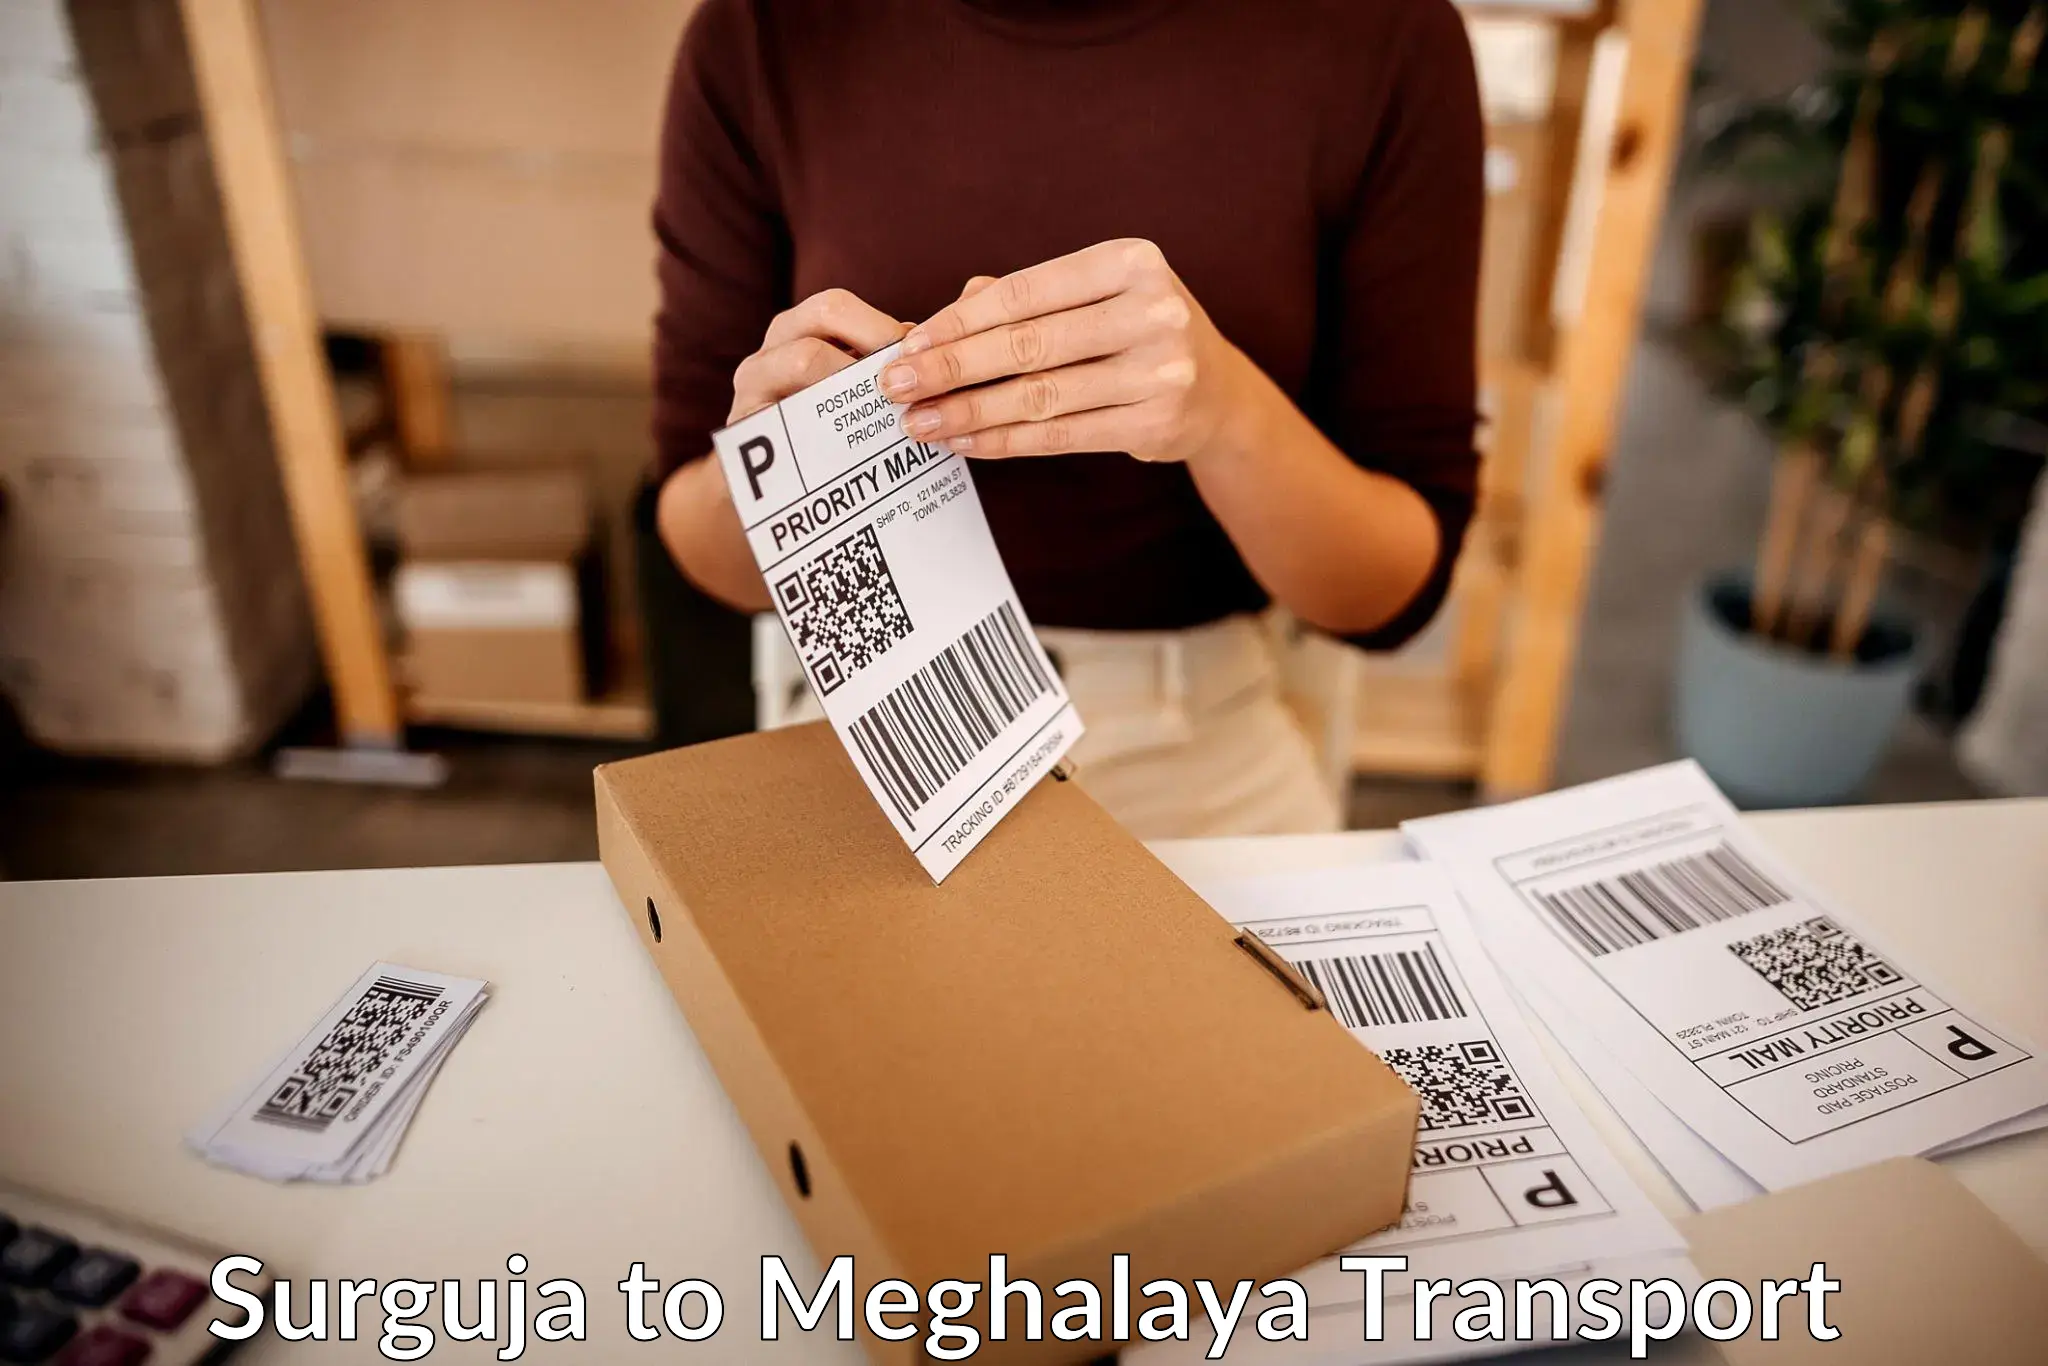 Goods delivery service Surguja to Cherrapunji